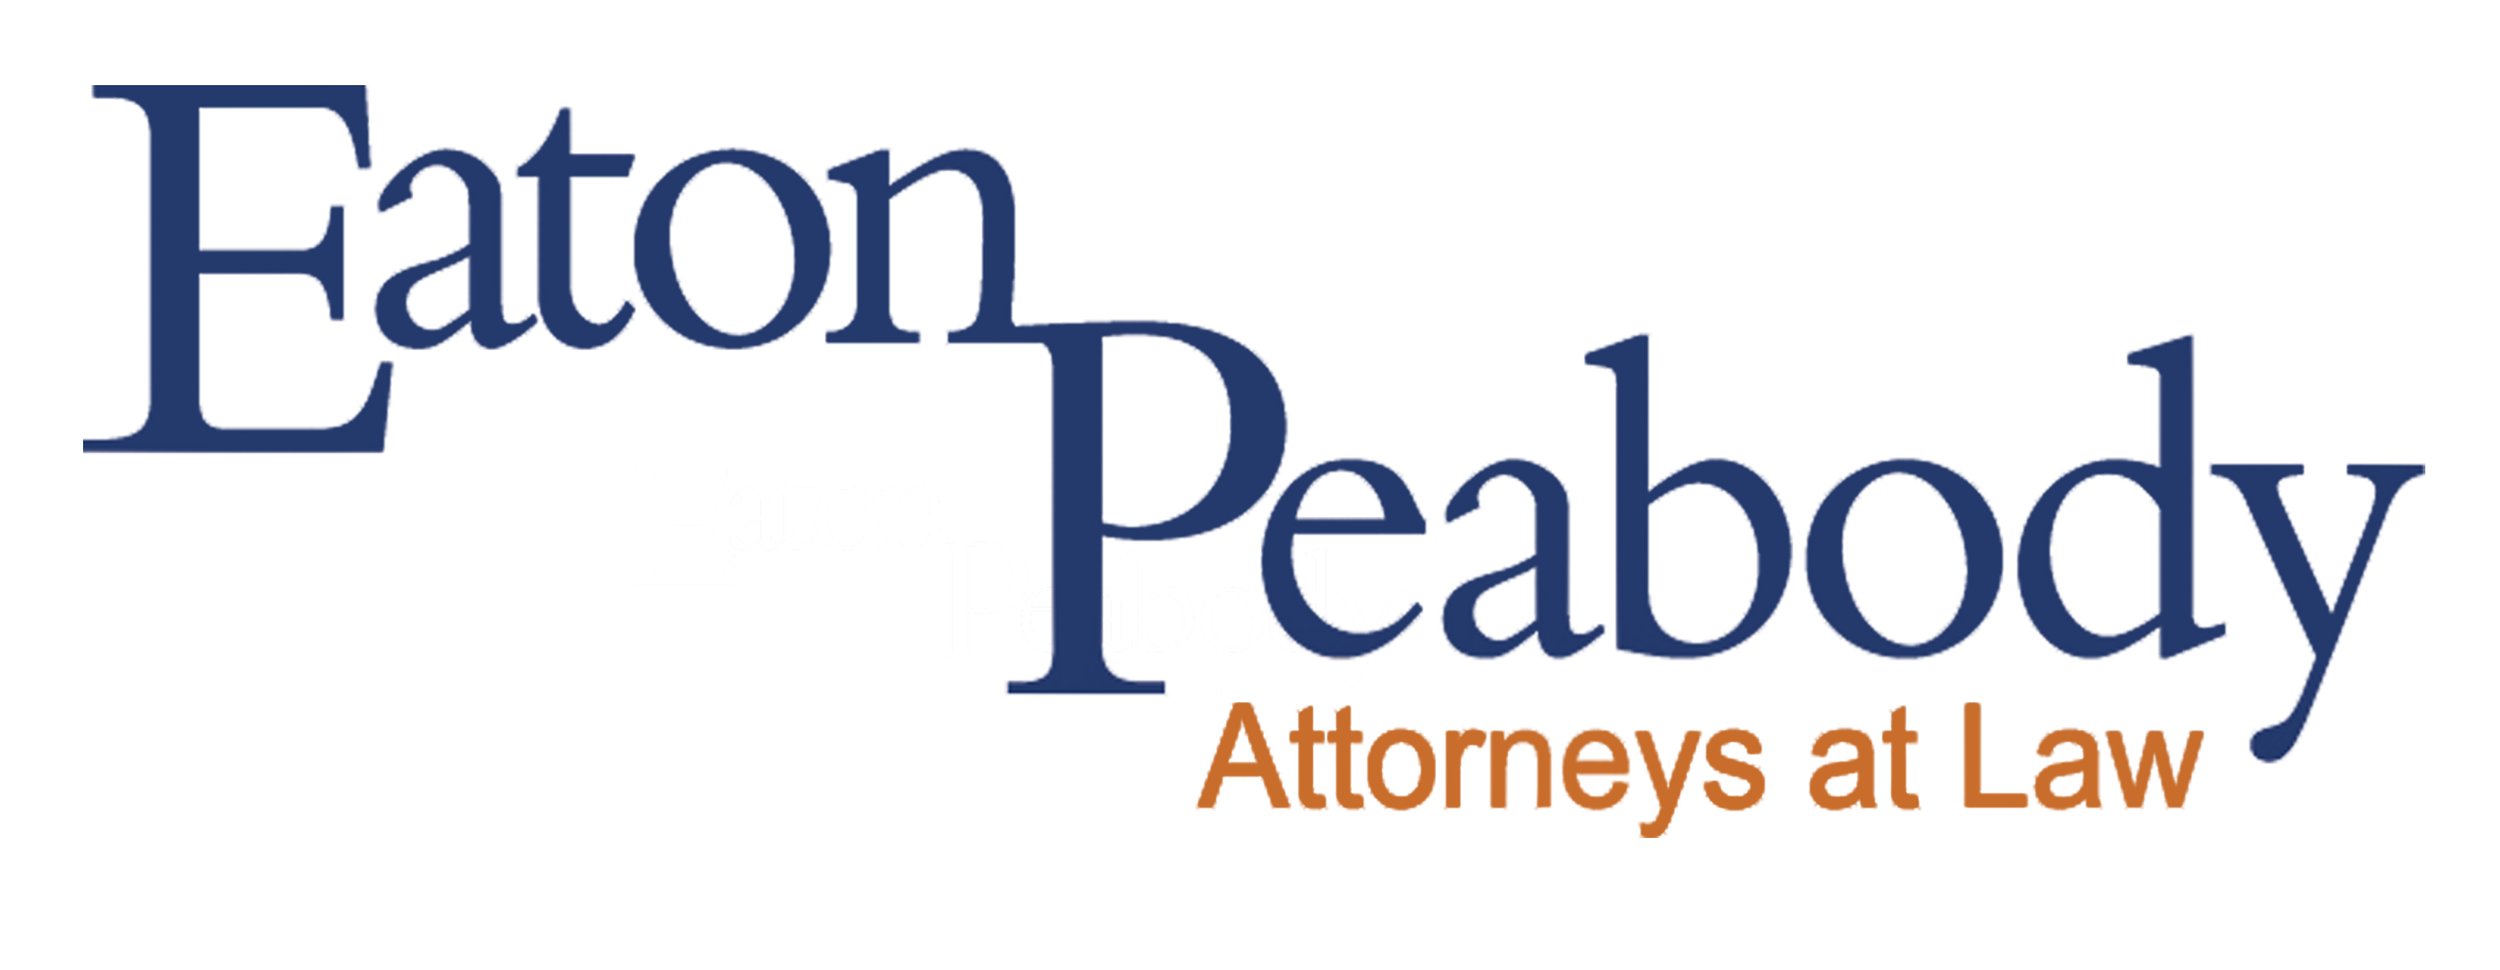 Eaton Peabody Logo (1).jpg